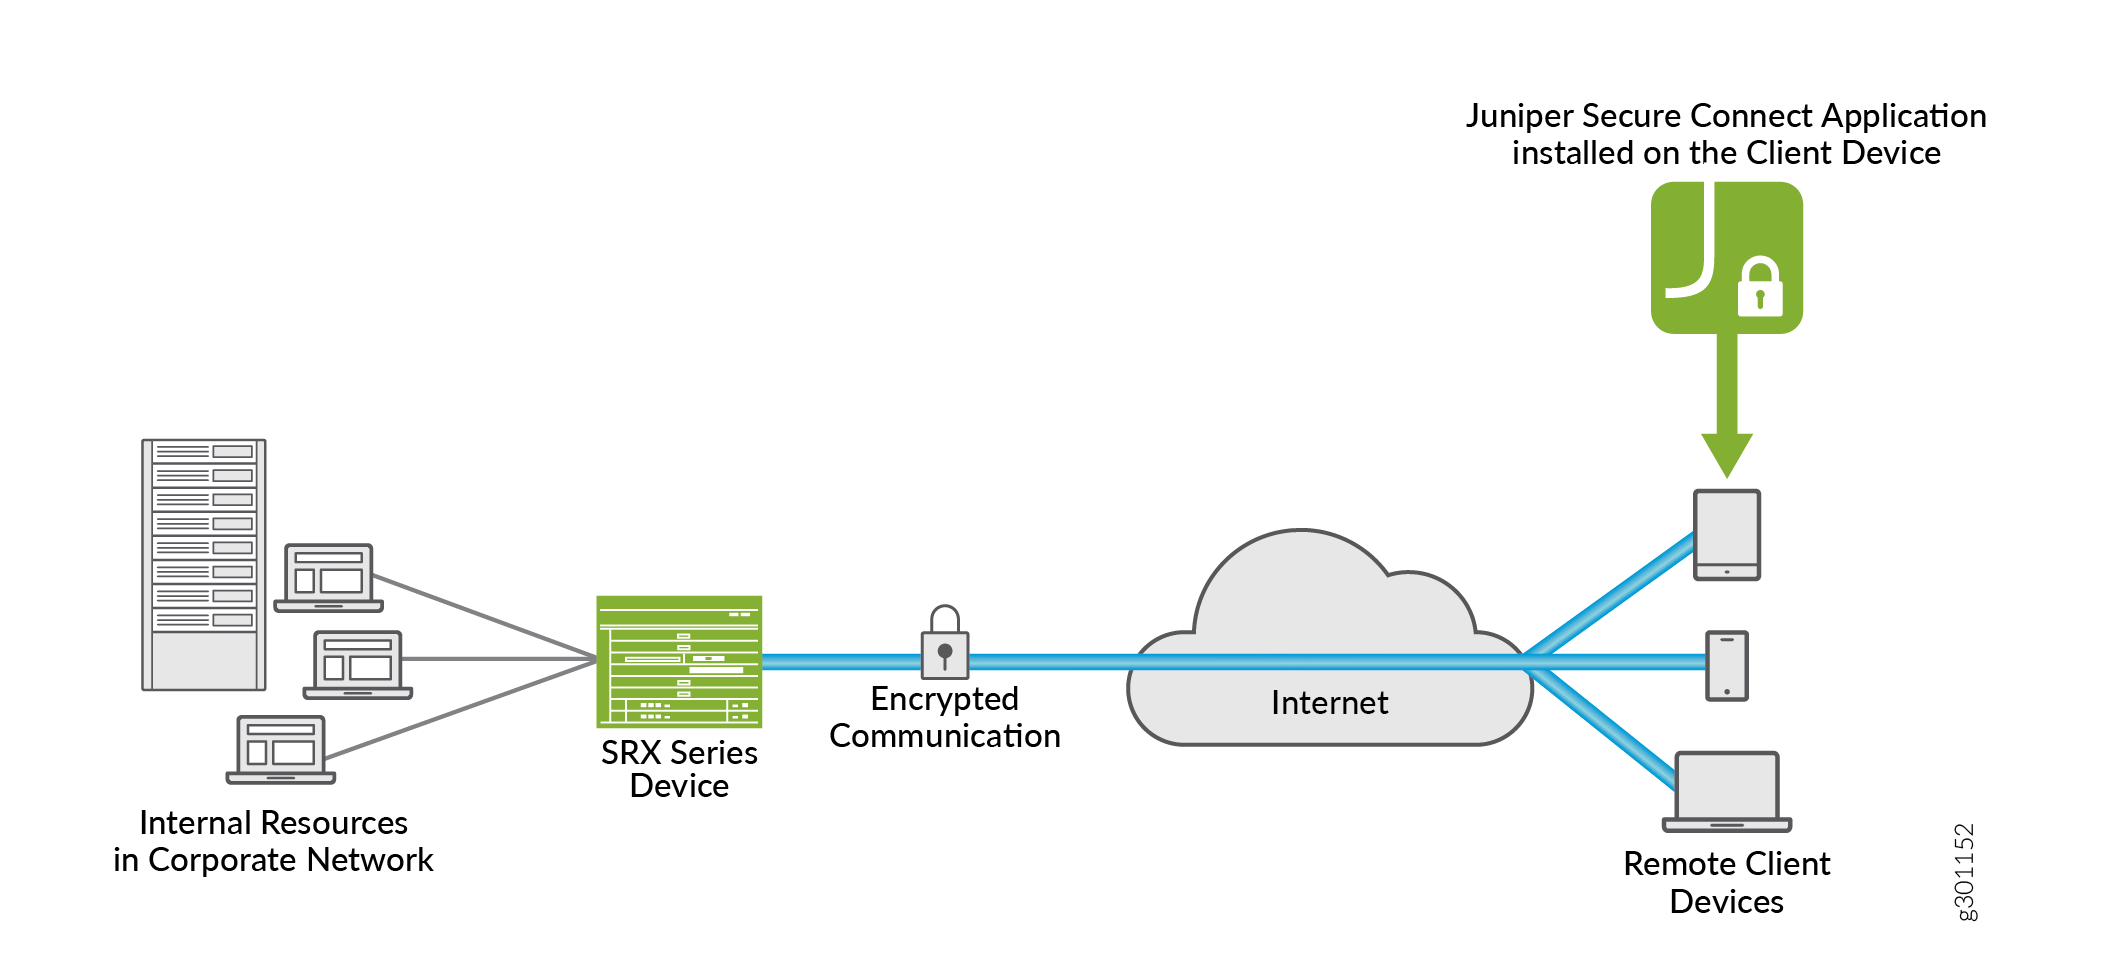 Juniper Secure Connect Remote Access Solution